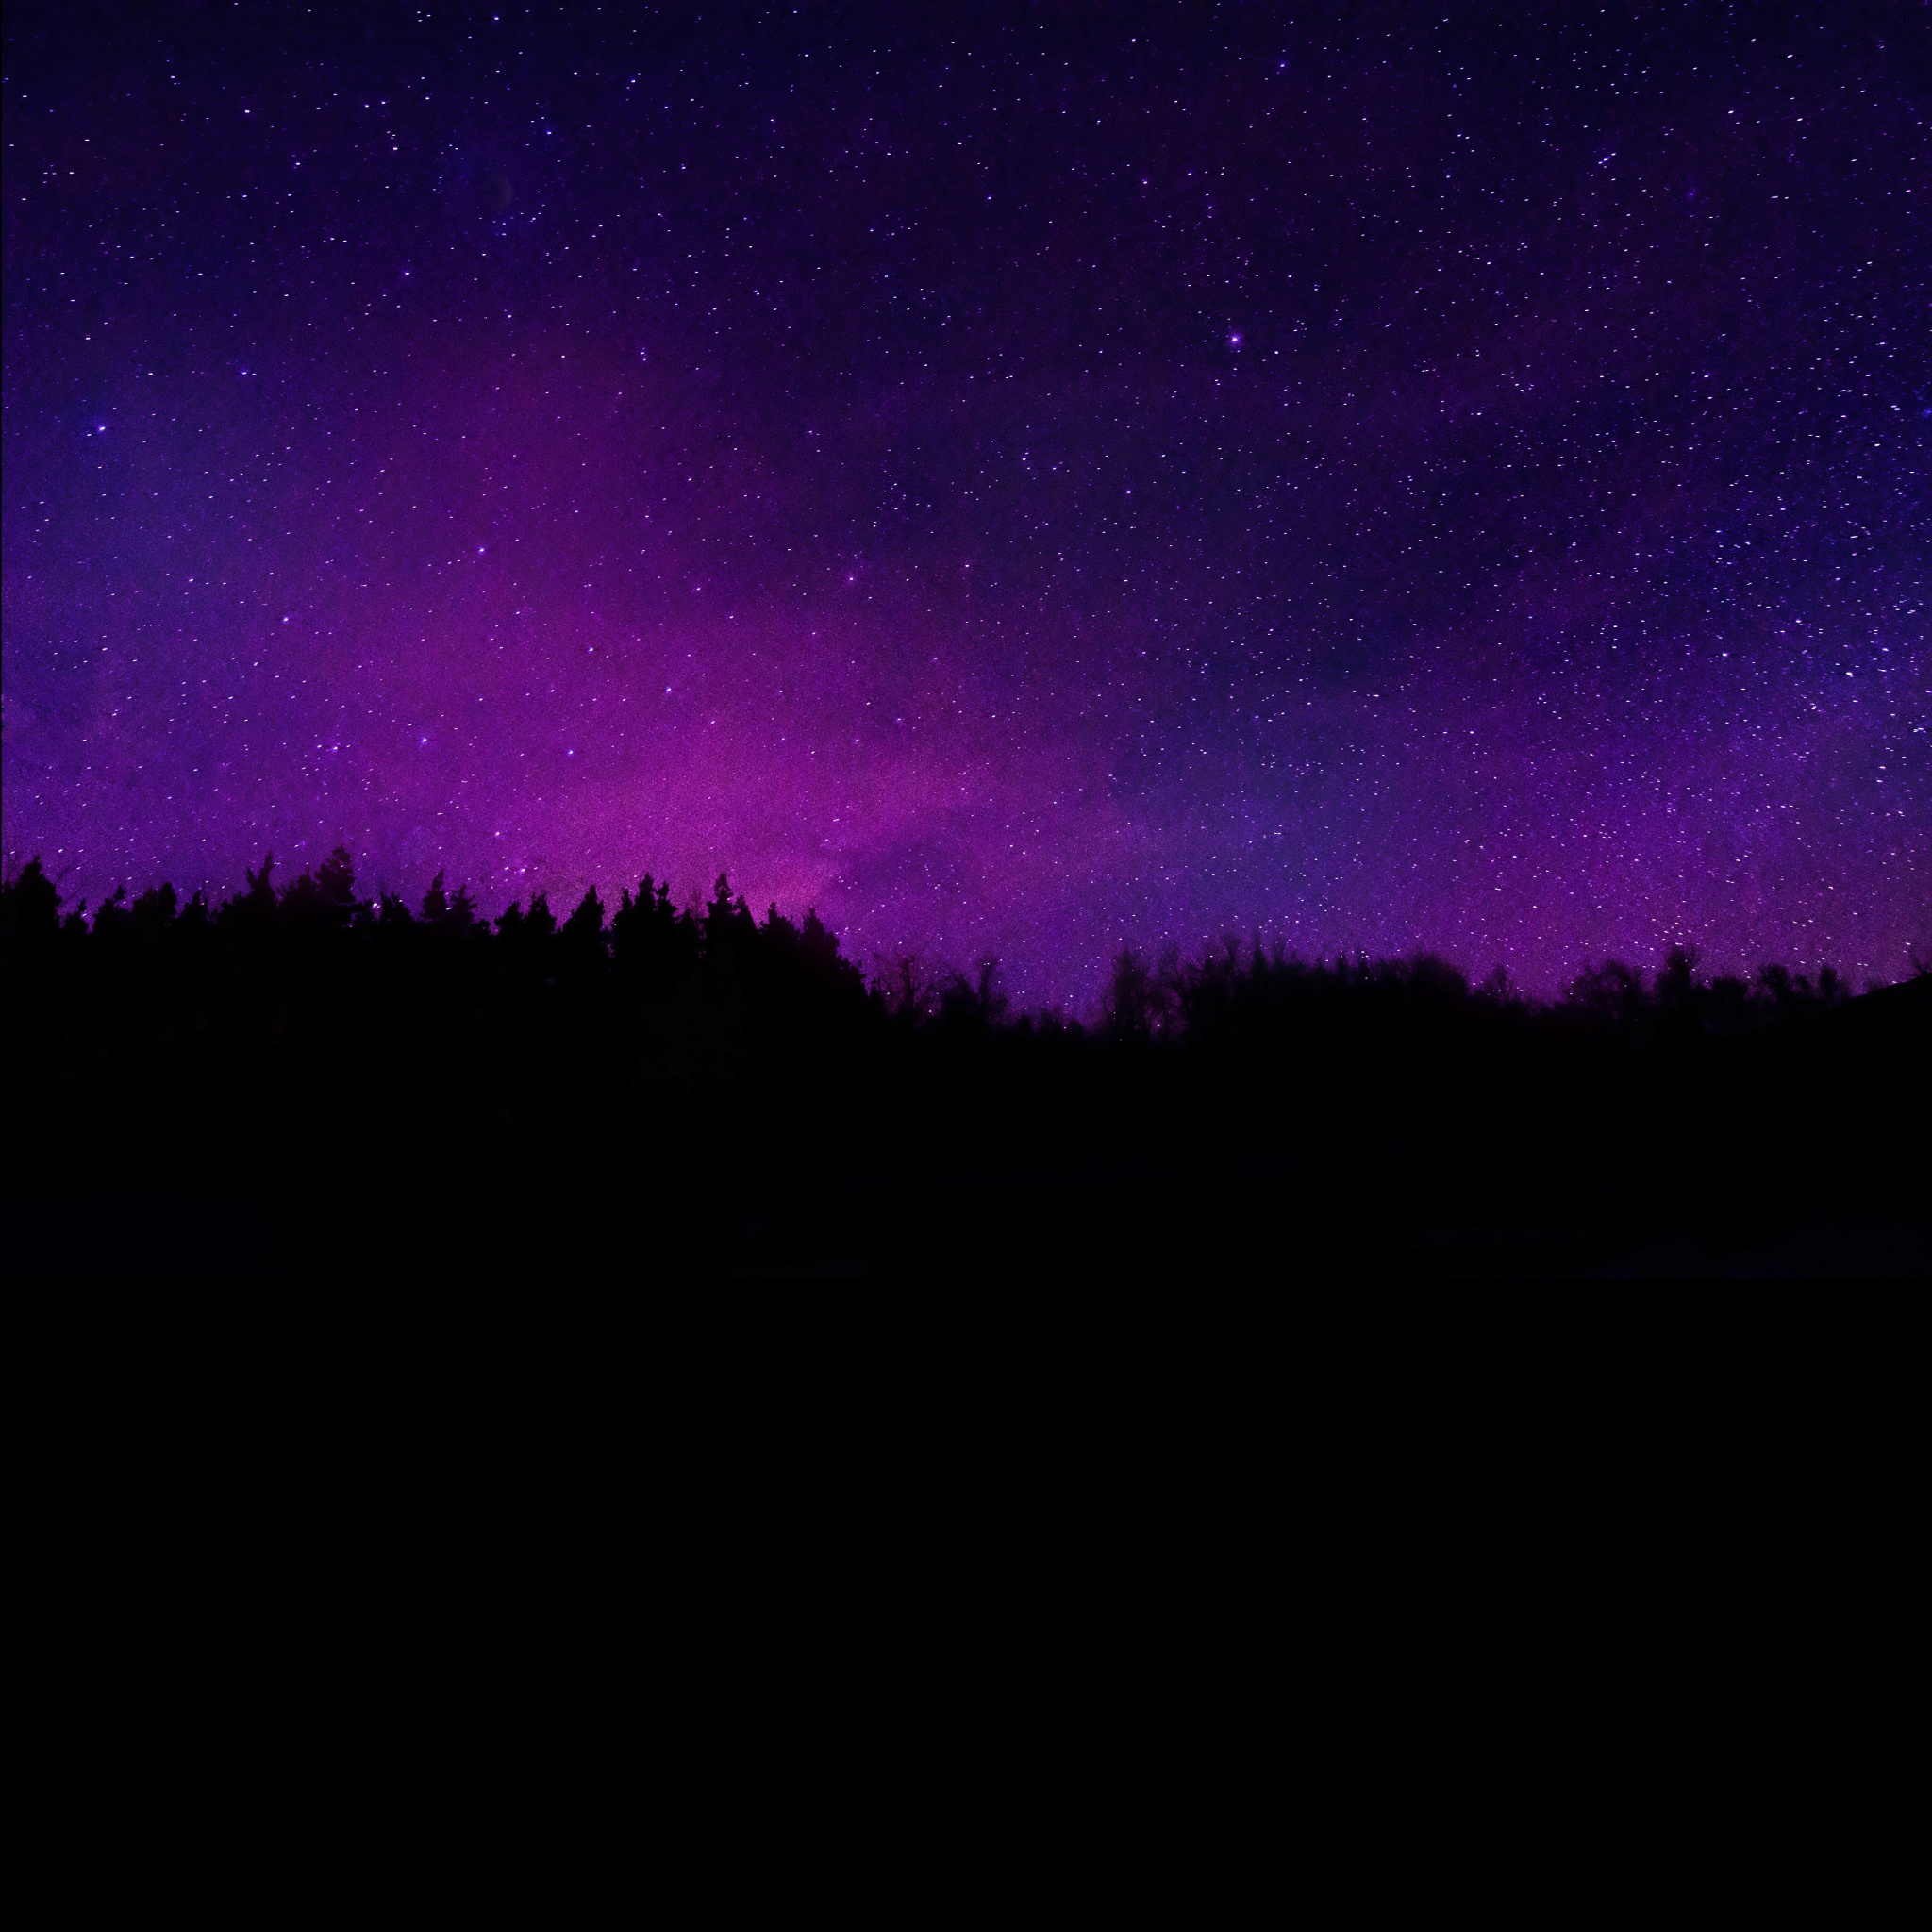 Download Dark Phone Night Sky With Stars Wallpaper